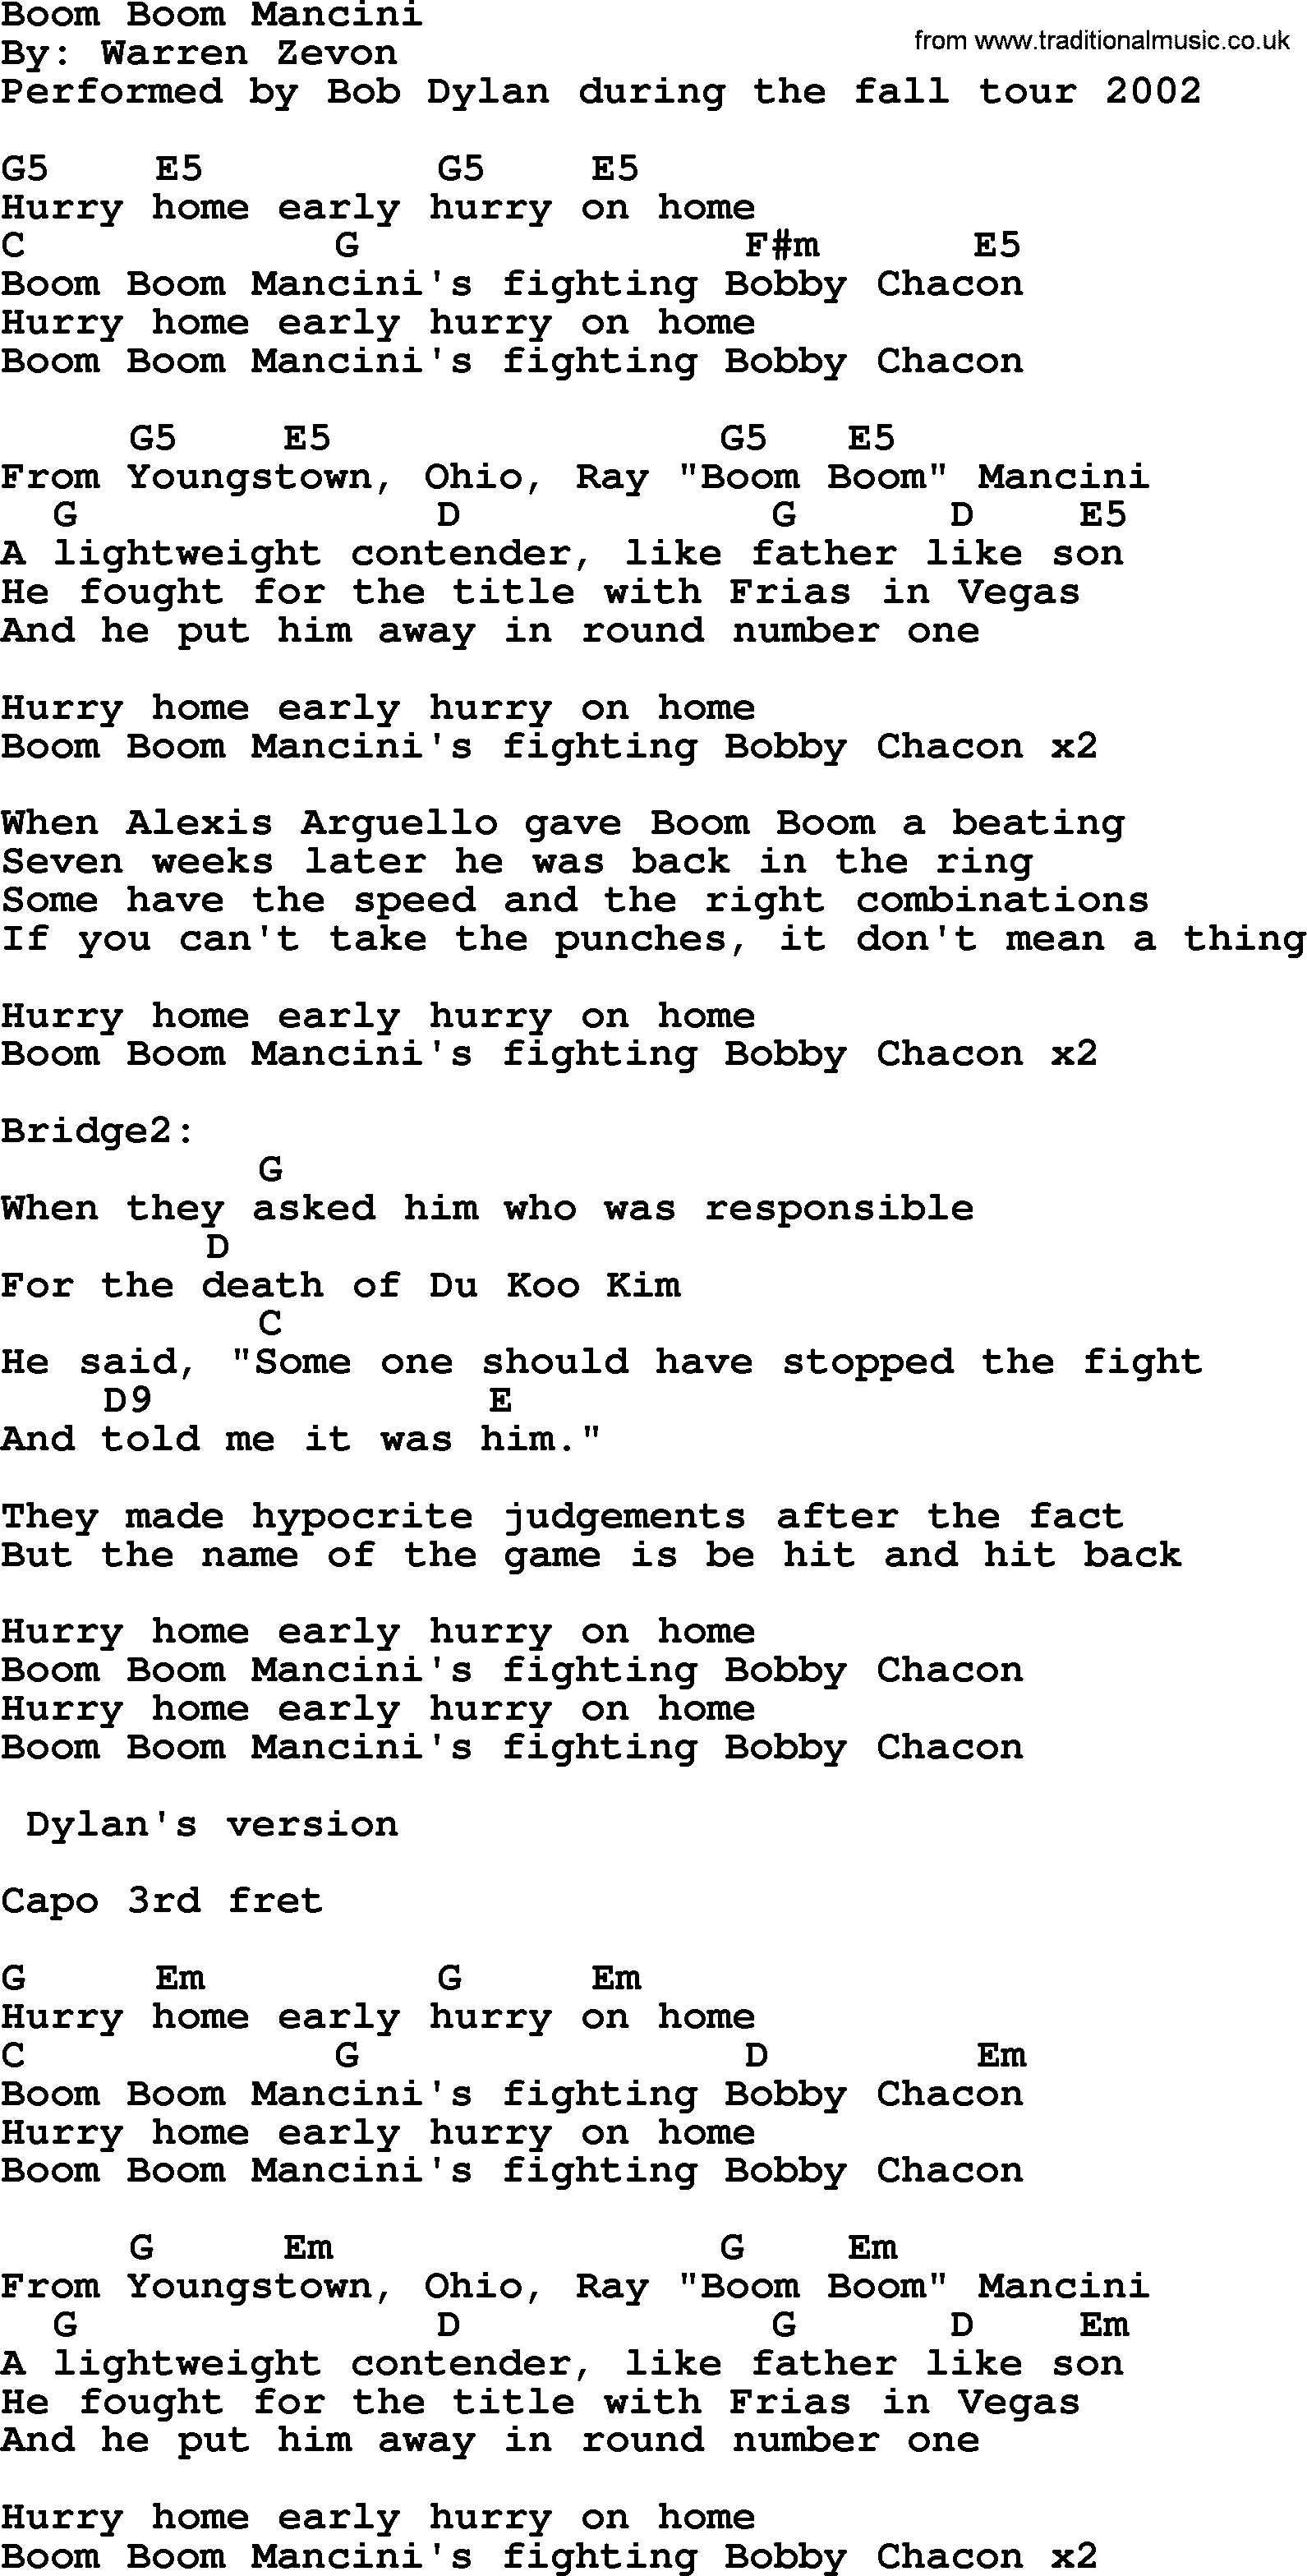 Bob Dylan song, lyrics with chords - Boom Boom Mancini